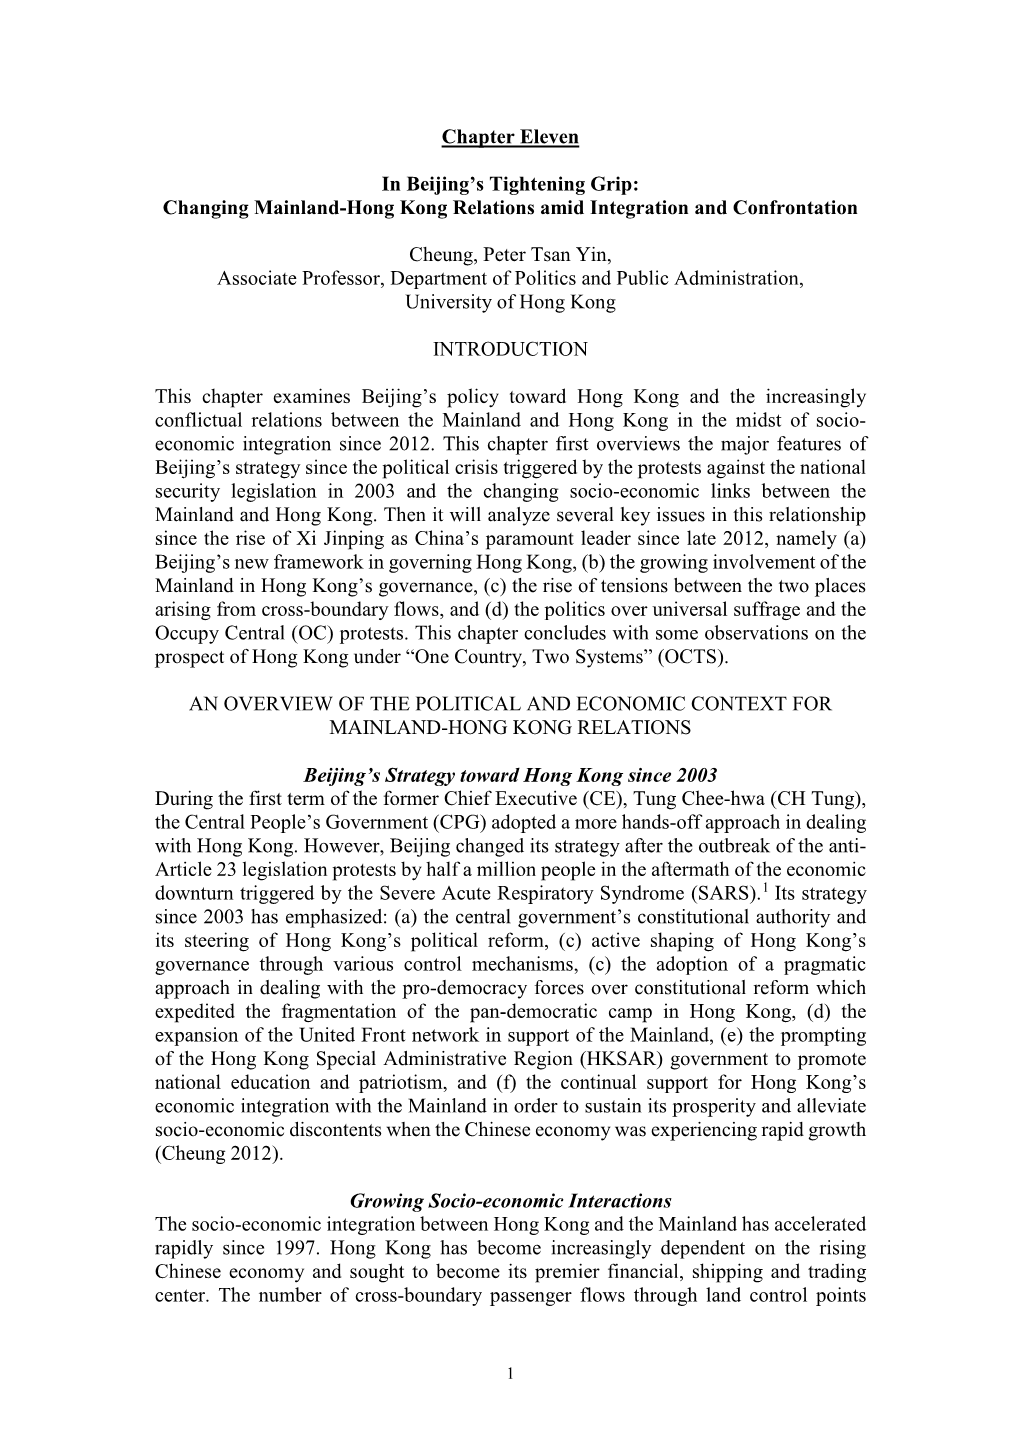 Chapter Eleven in Beijing's Tightening Grip: Changing Mainland-Hong